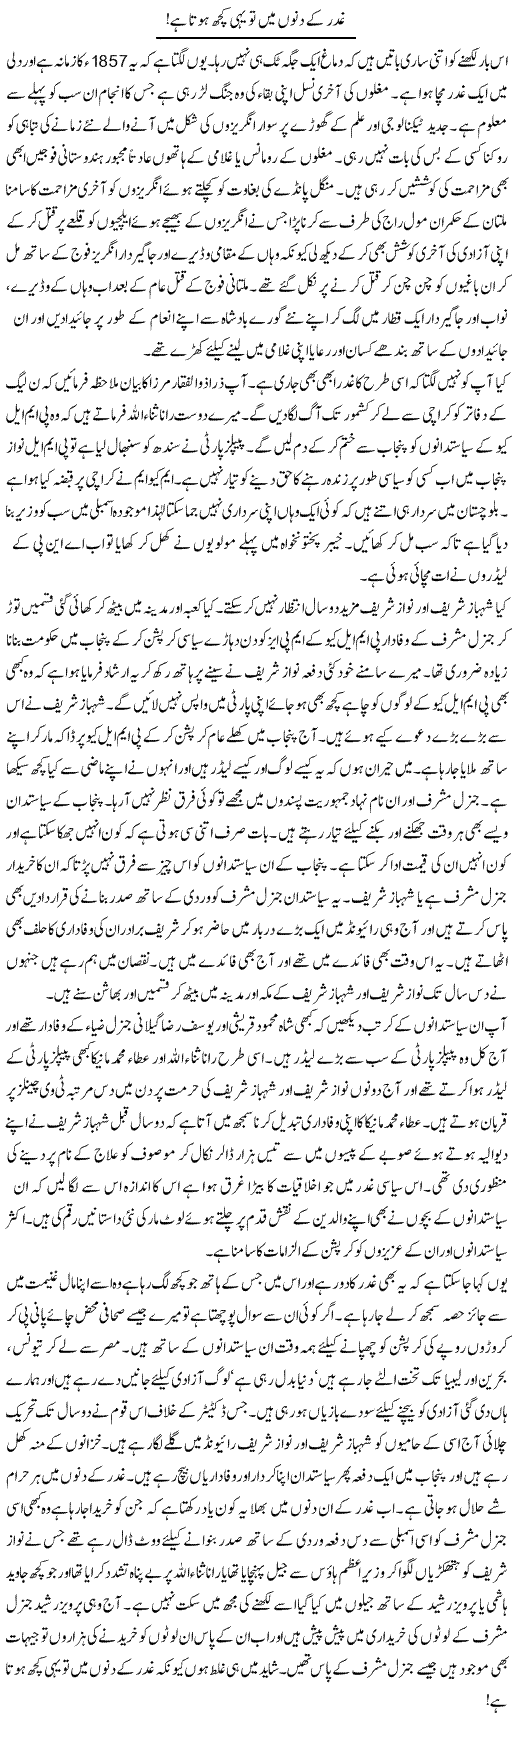 Nawaz Vs Zardari War Express Column Rauf Klasra 24 February 2011